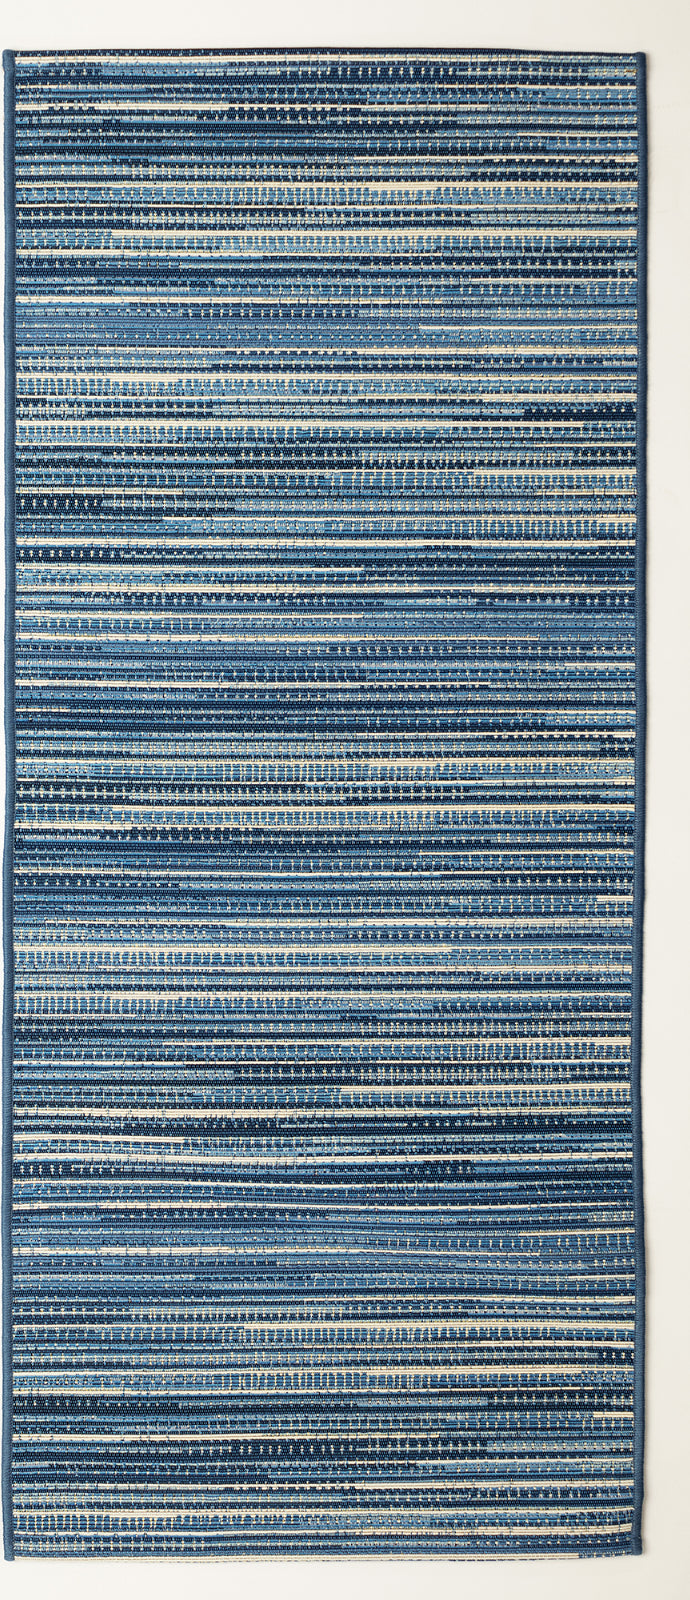 Trans Ocean Marina 8052/03 Stripes Blue Area Rug by Liora Manne